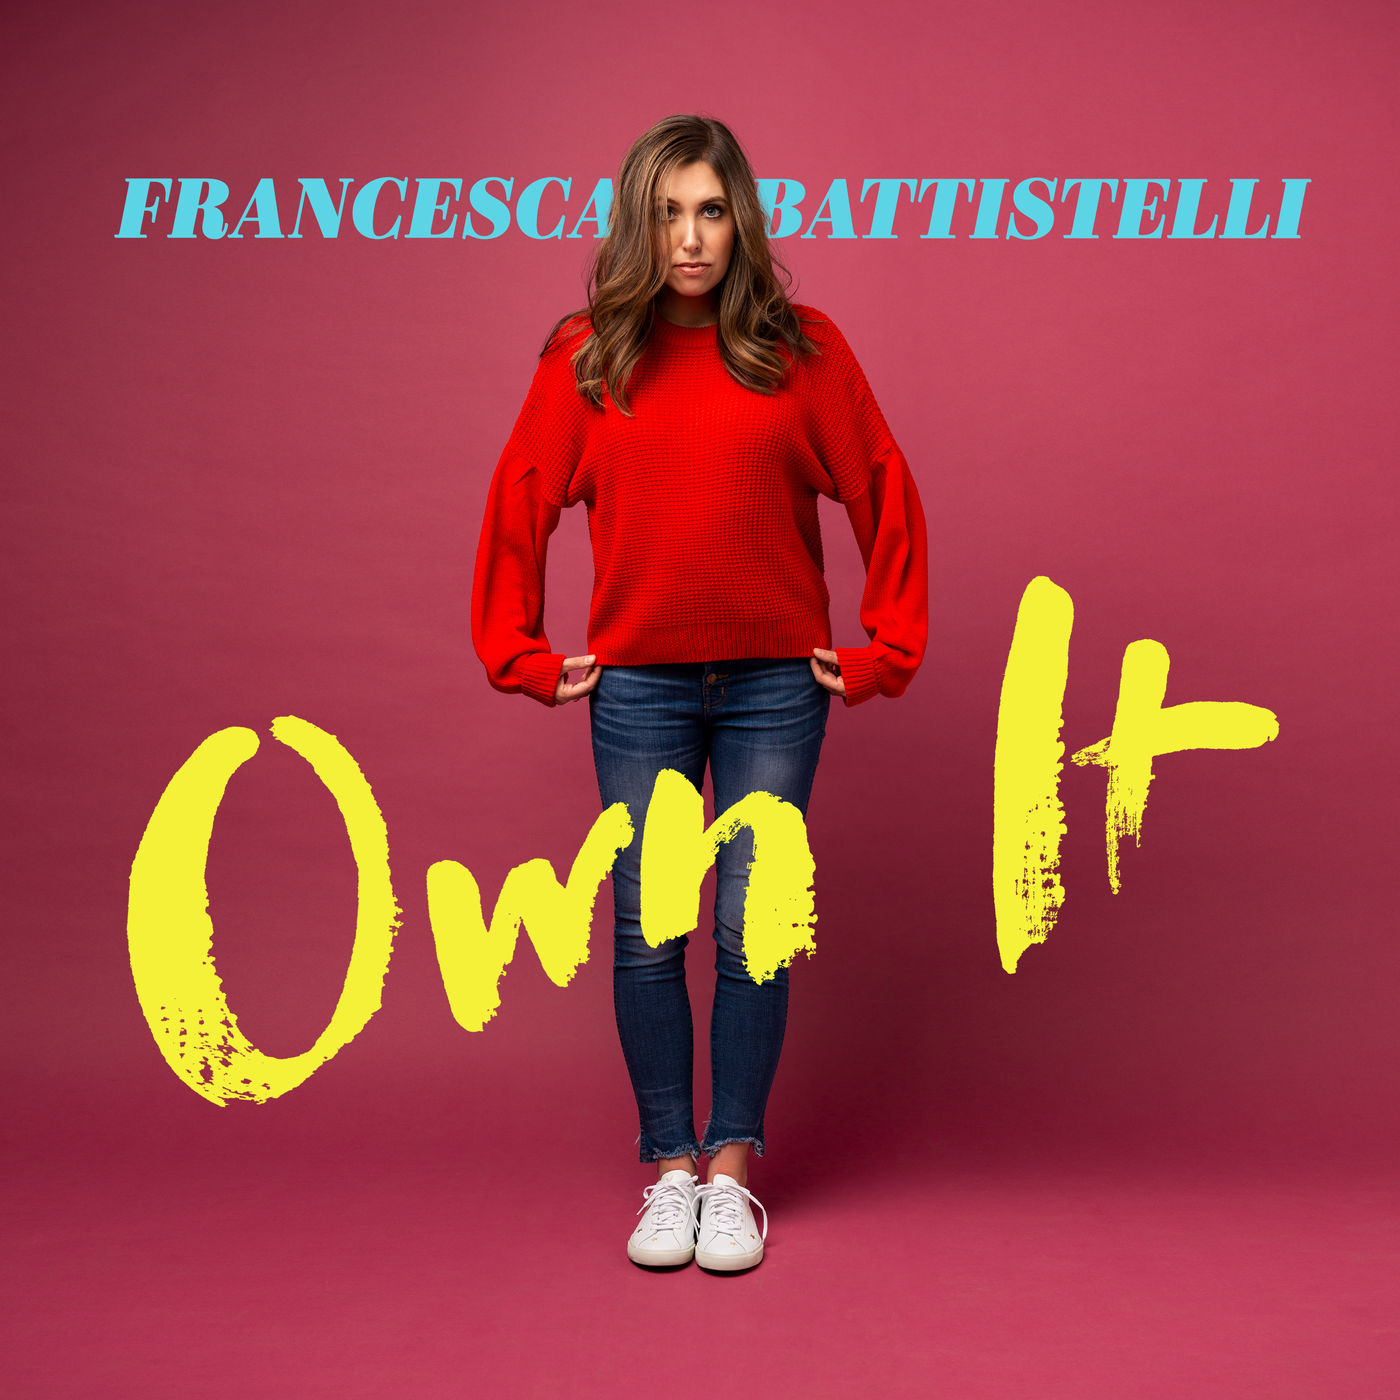 Francesca Battistelli - Own It (2018)